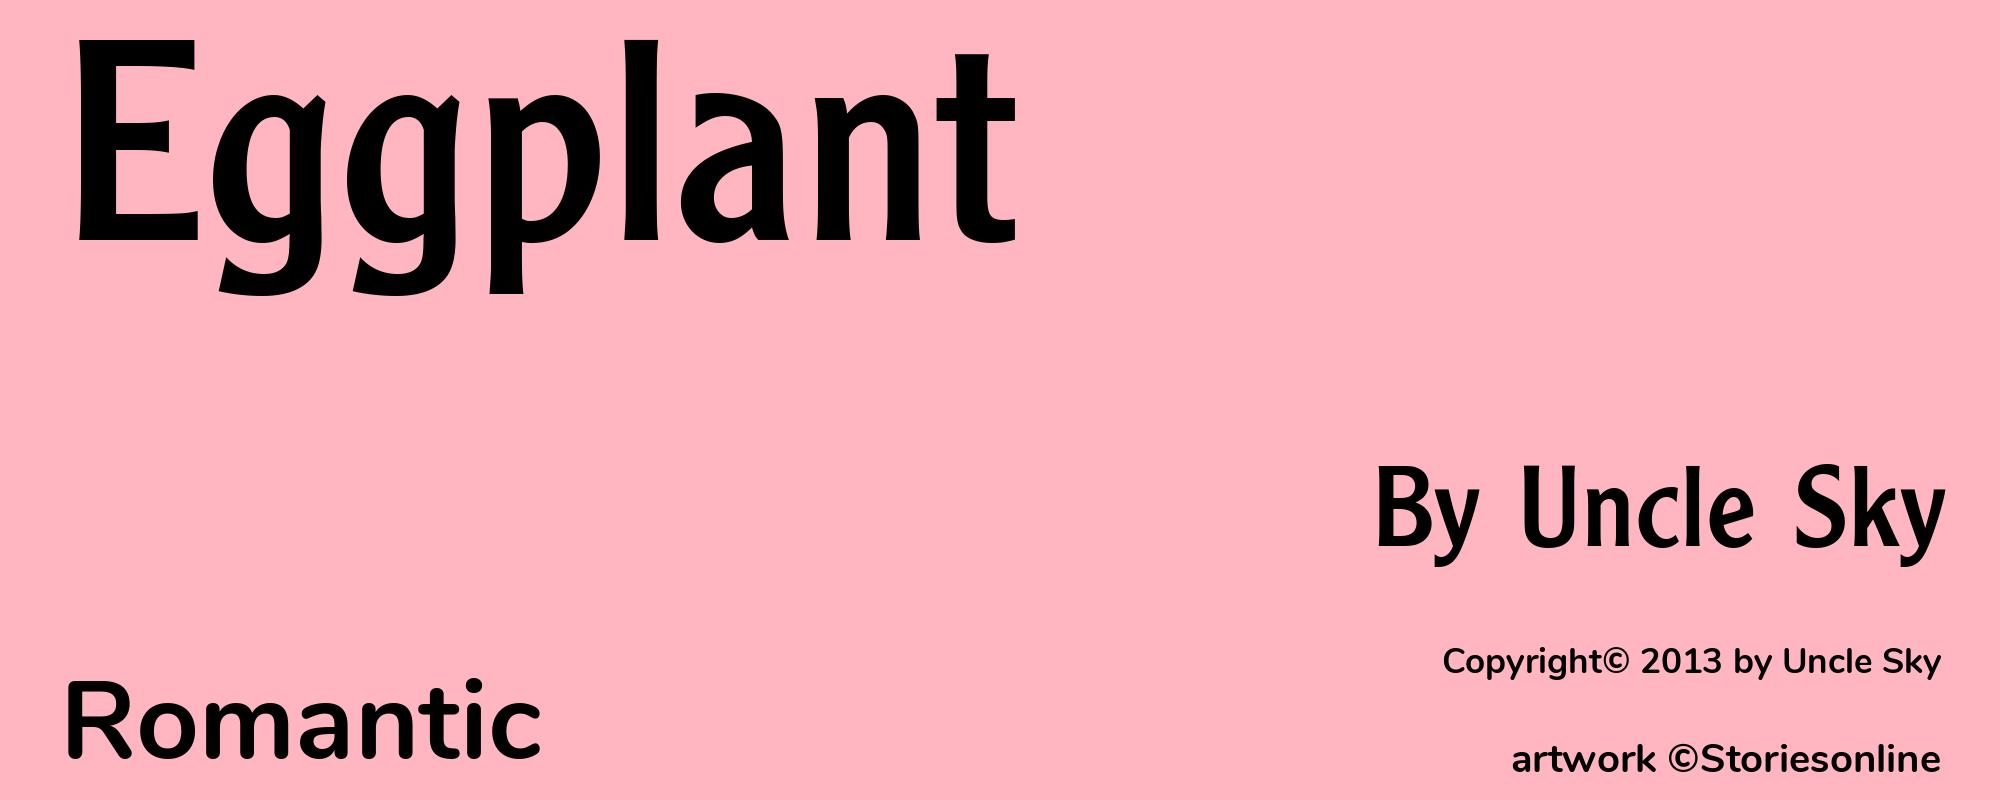 Eggplant - Cover